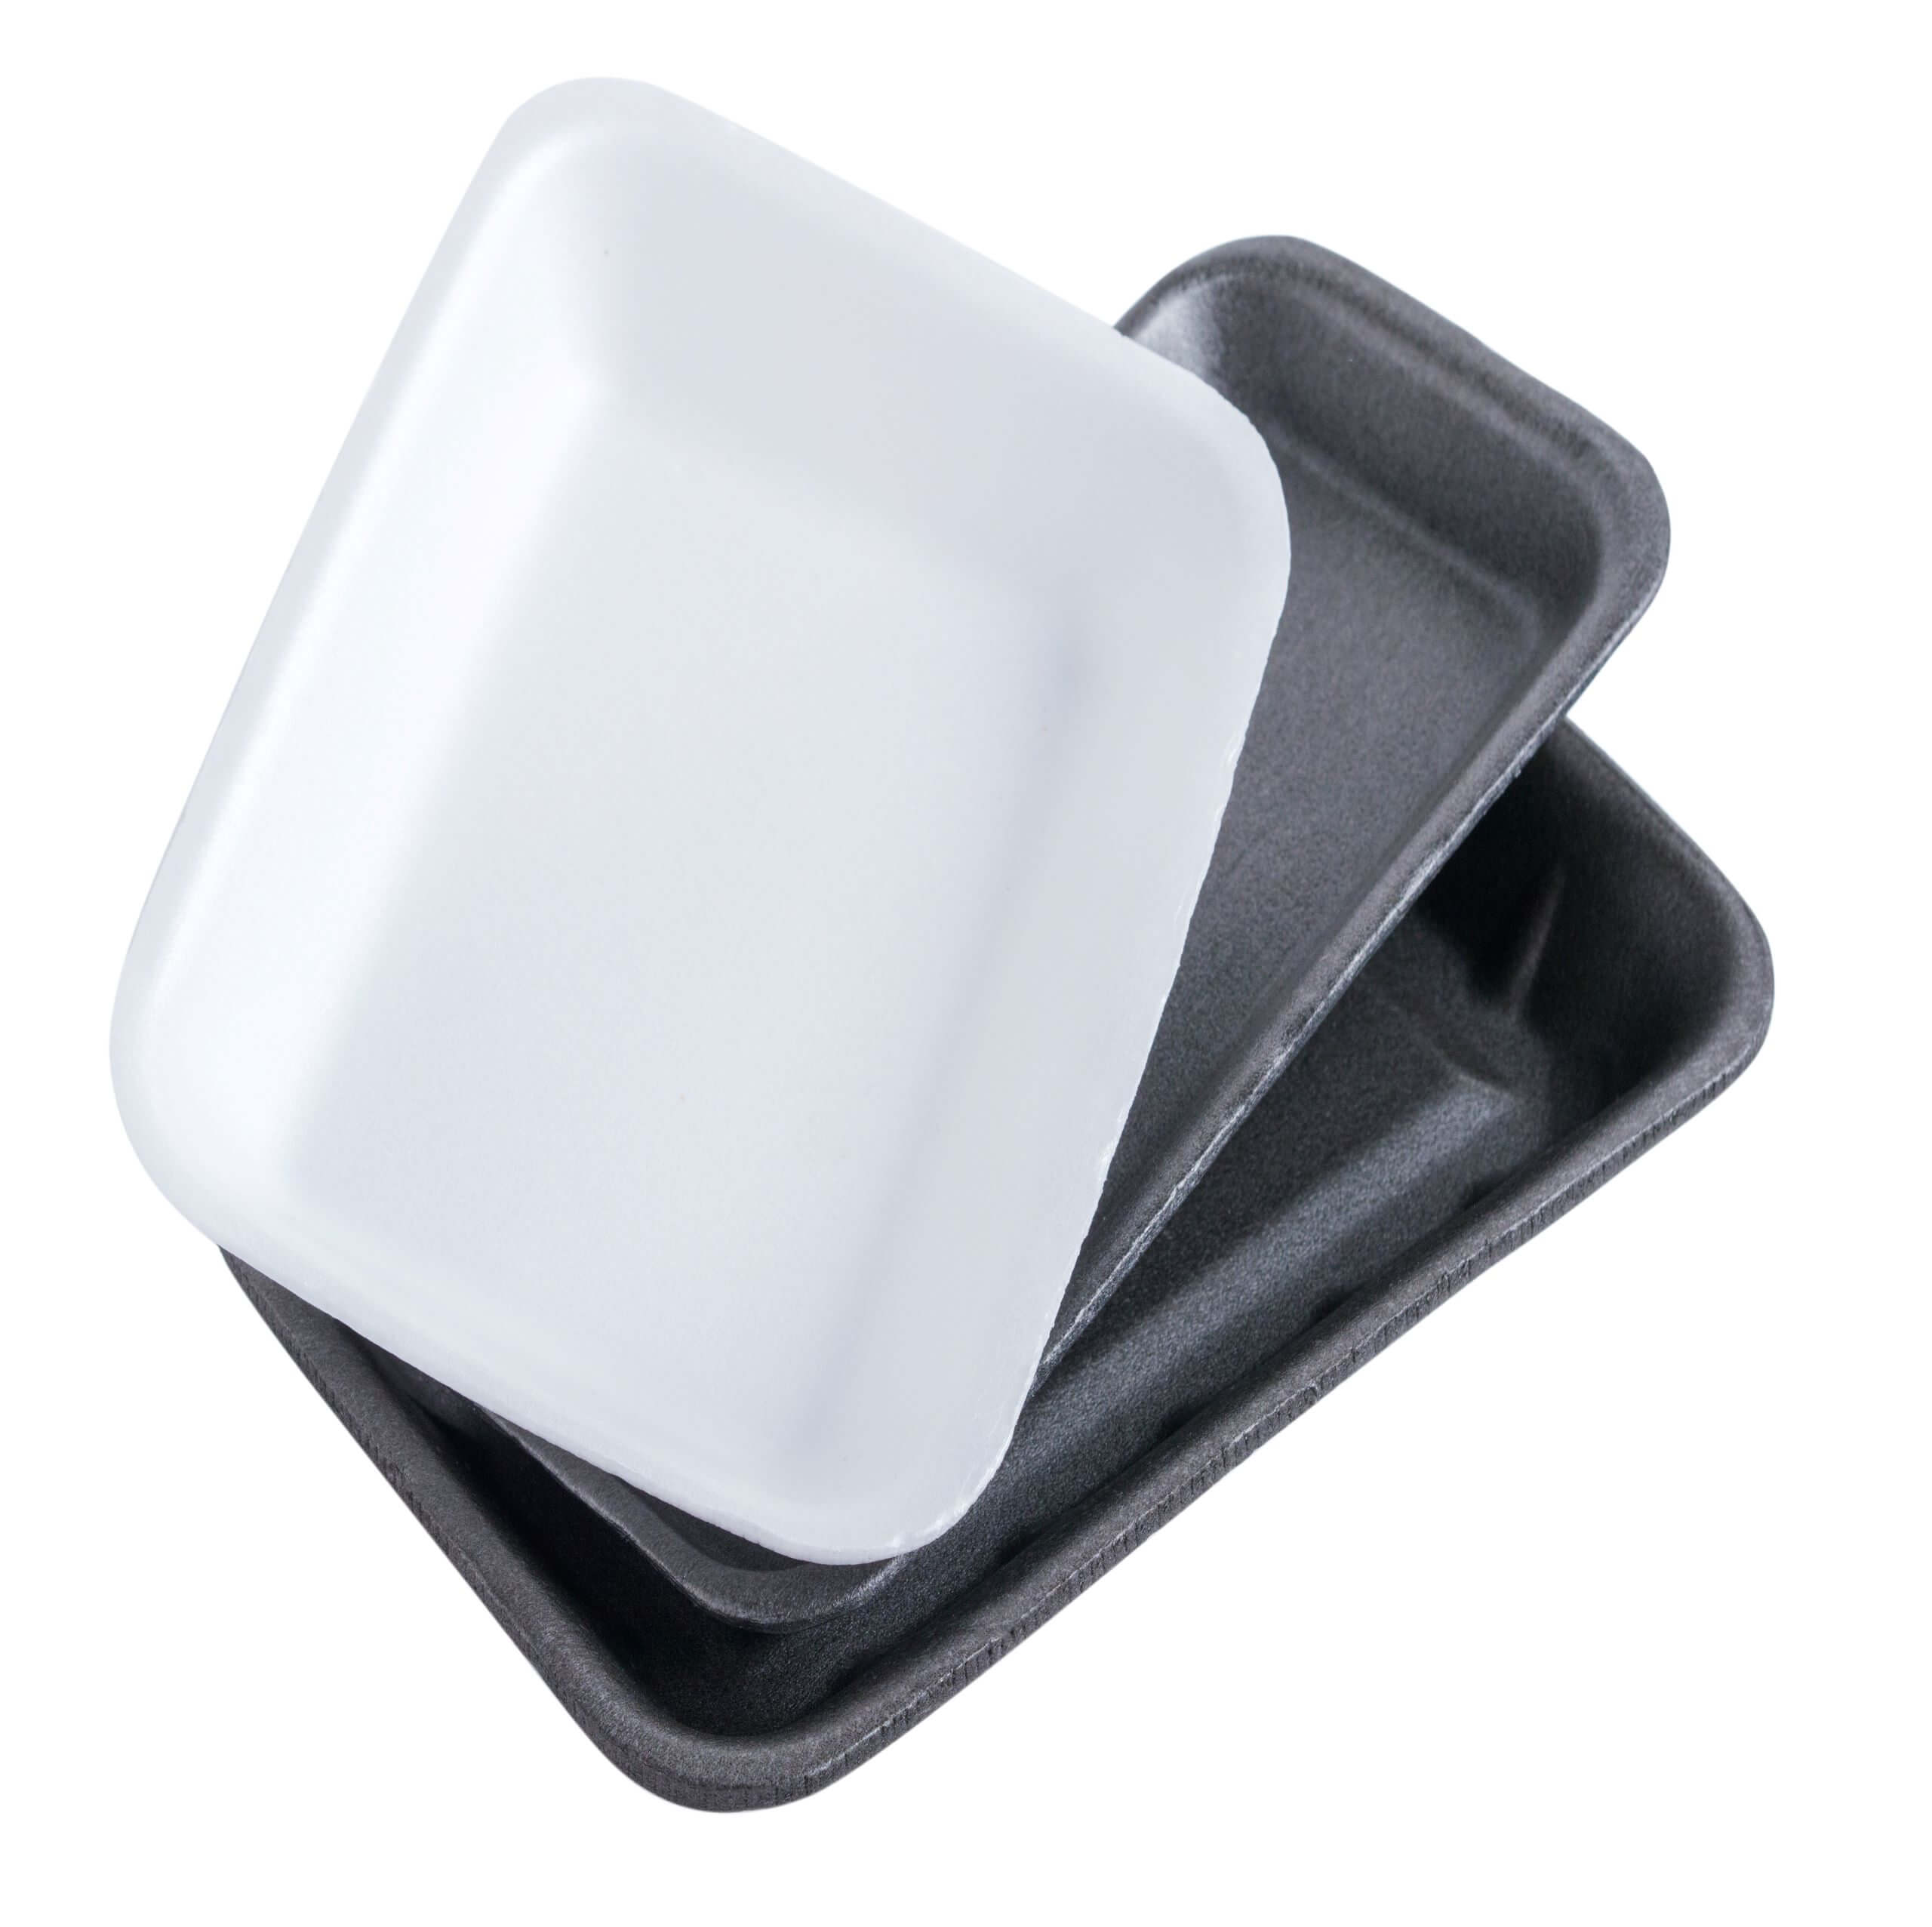 An image of Styrofoam Food Trays.